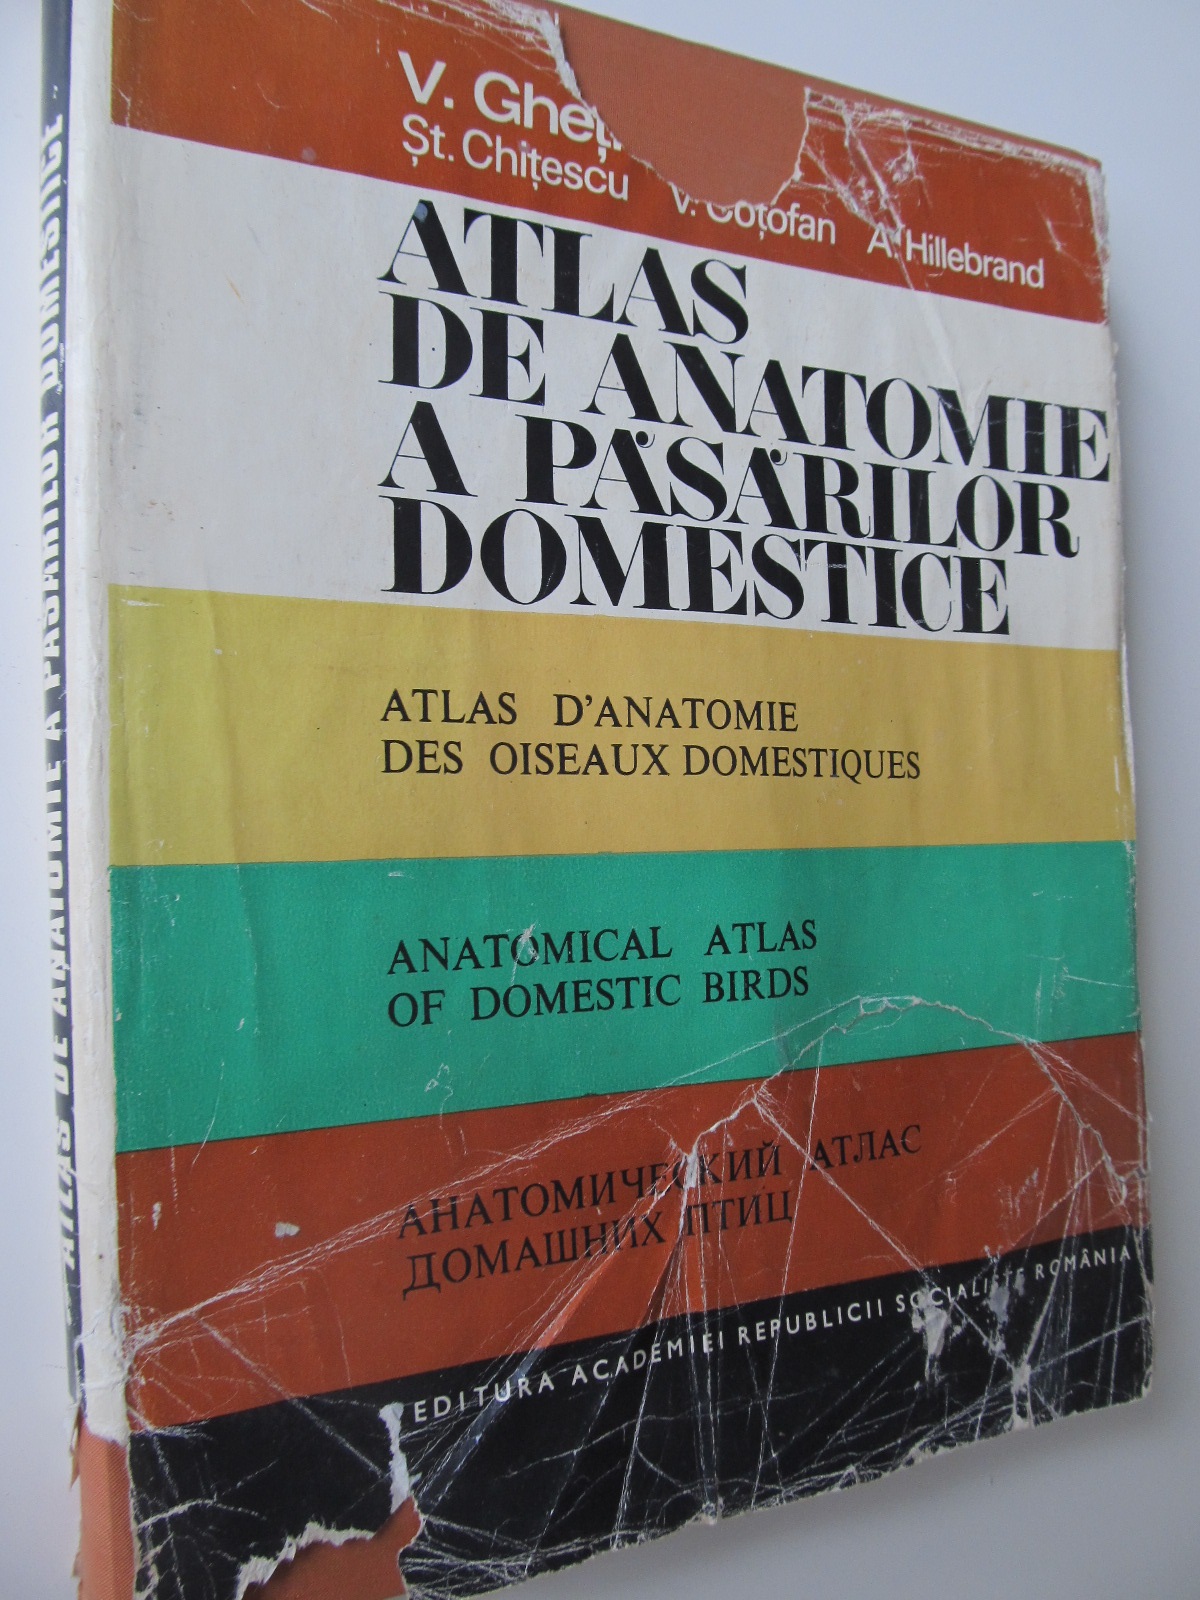 Atlas de anatomie a pasarilor domestice - V. Ghetie , St. Chitescu , V. Cotofan , A. Hillebrand | Detalii carte